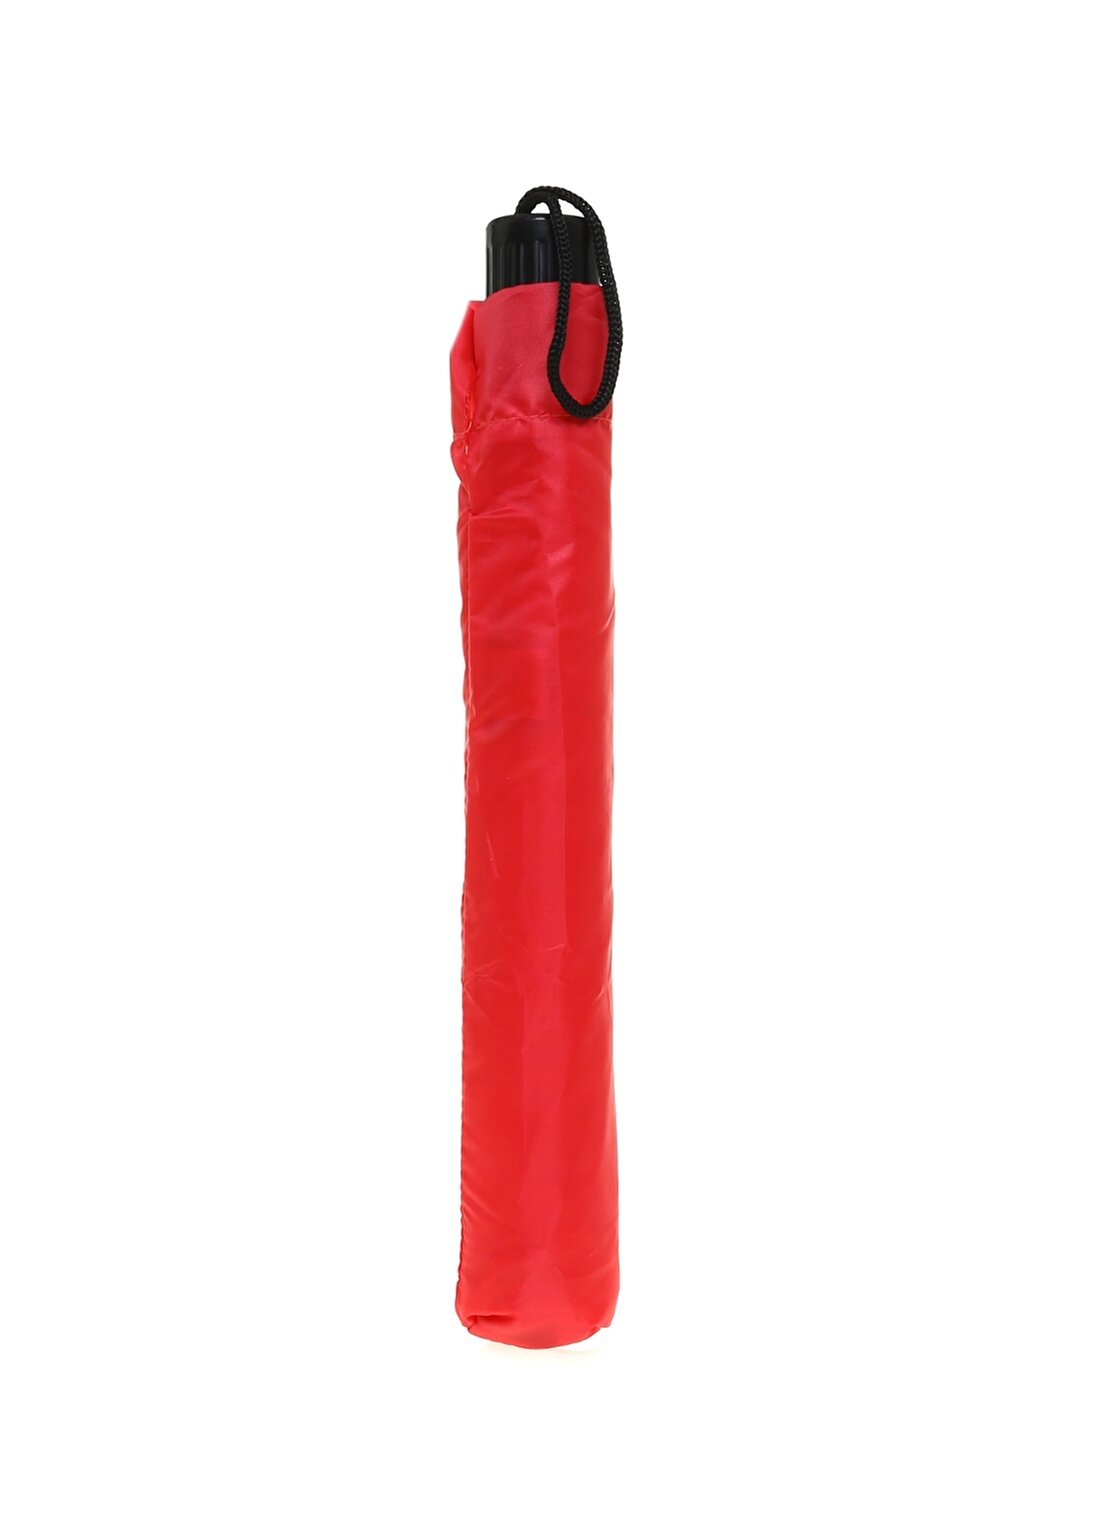 T-Box Kılıflı Kırmızı Şemsiye